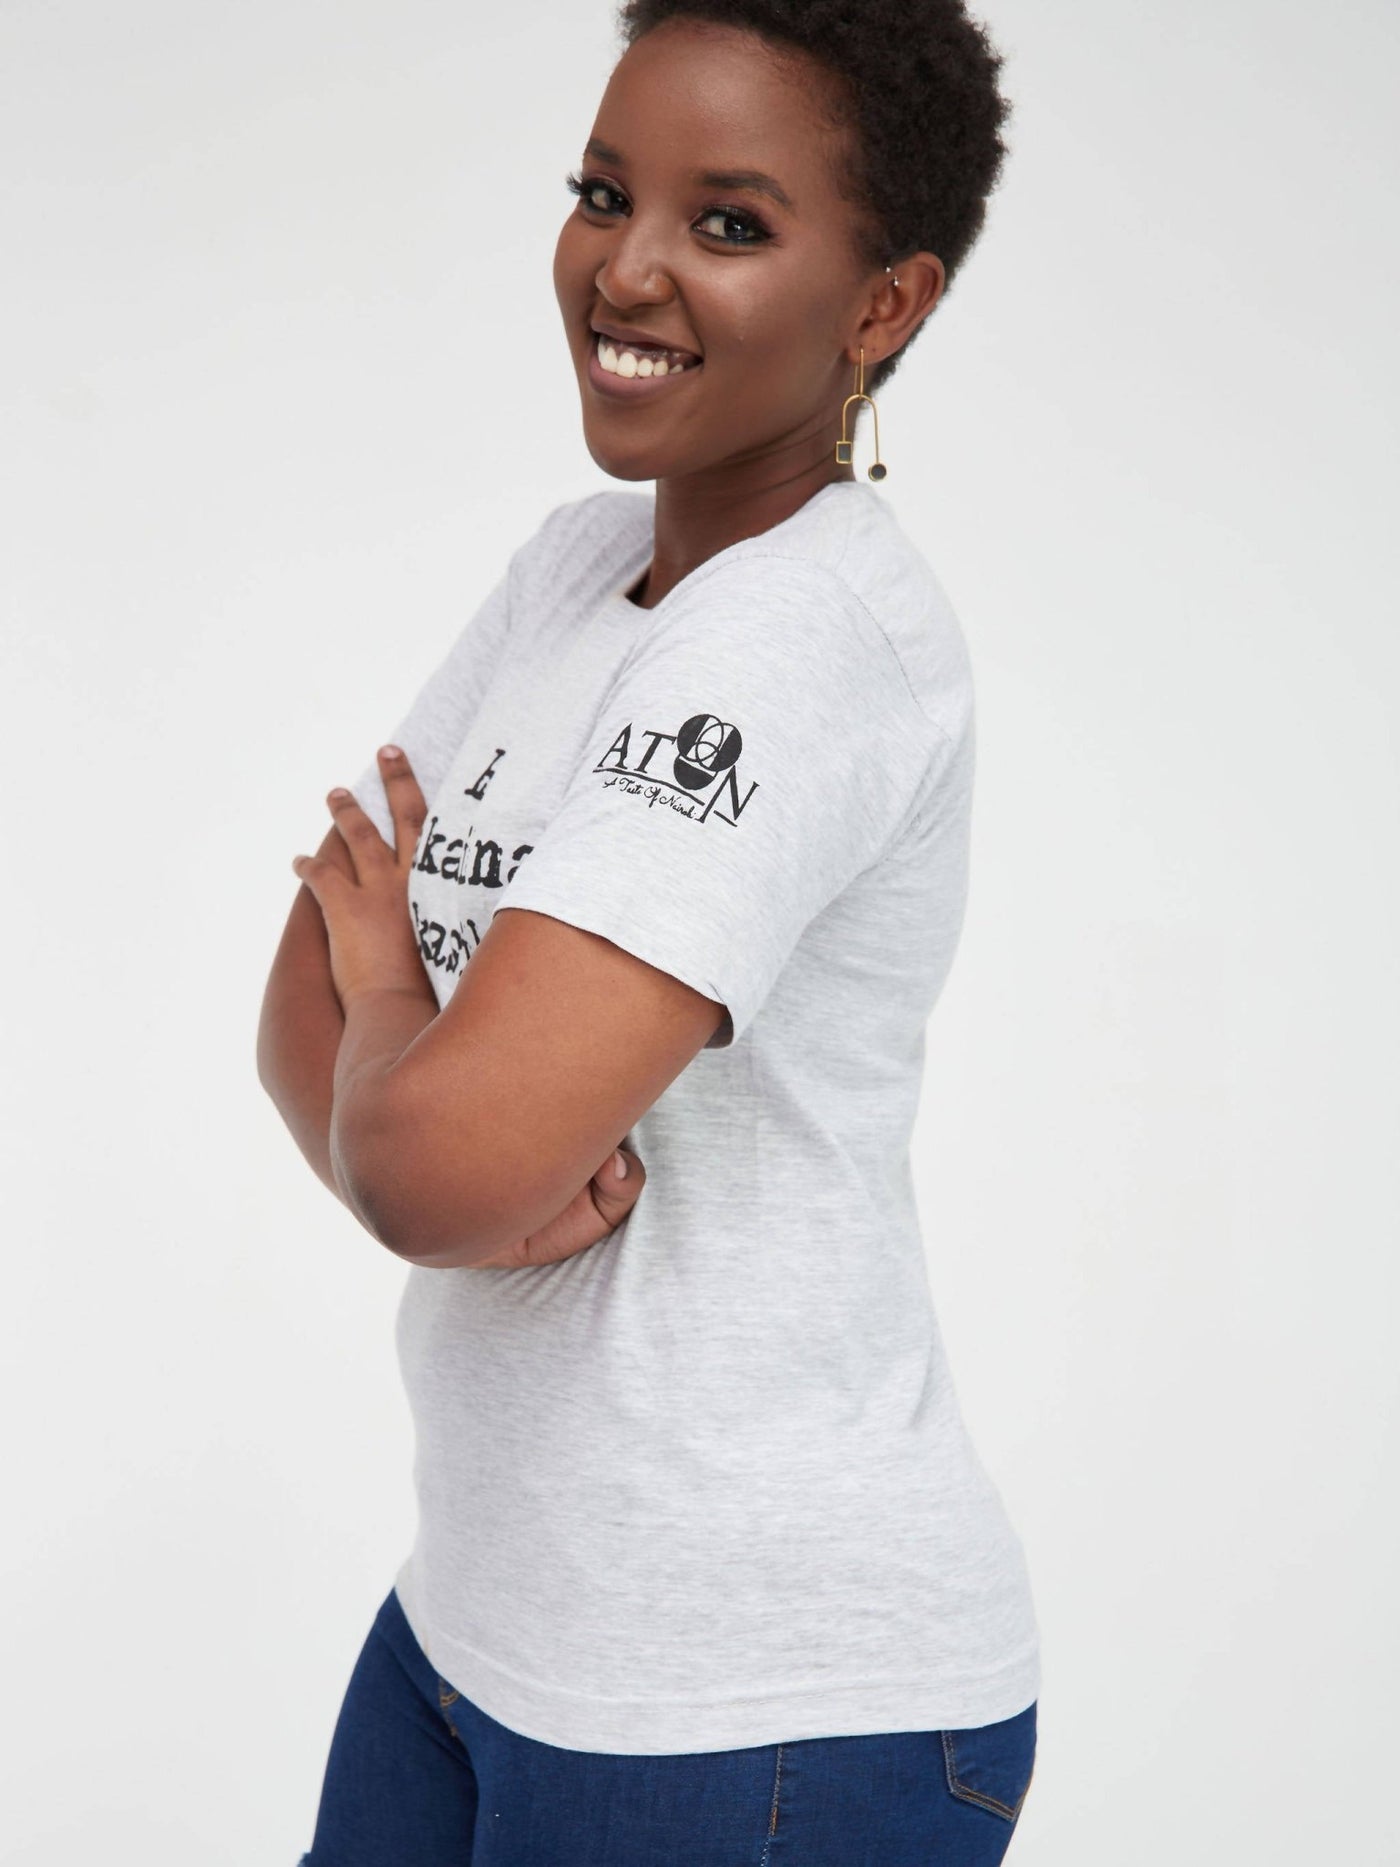 Zola Hii Mwaka Haina Makasiriko T-shirt - Grey - Shop Zetu Kenya